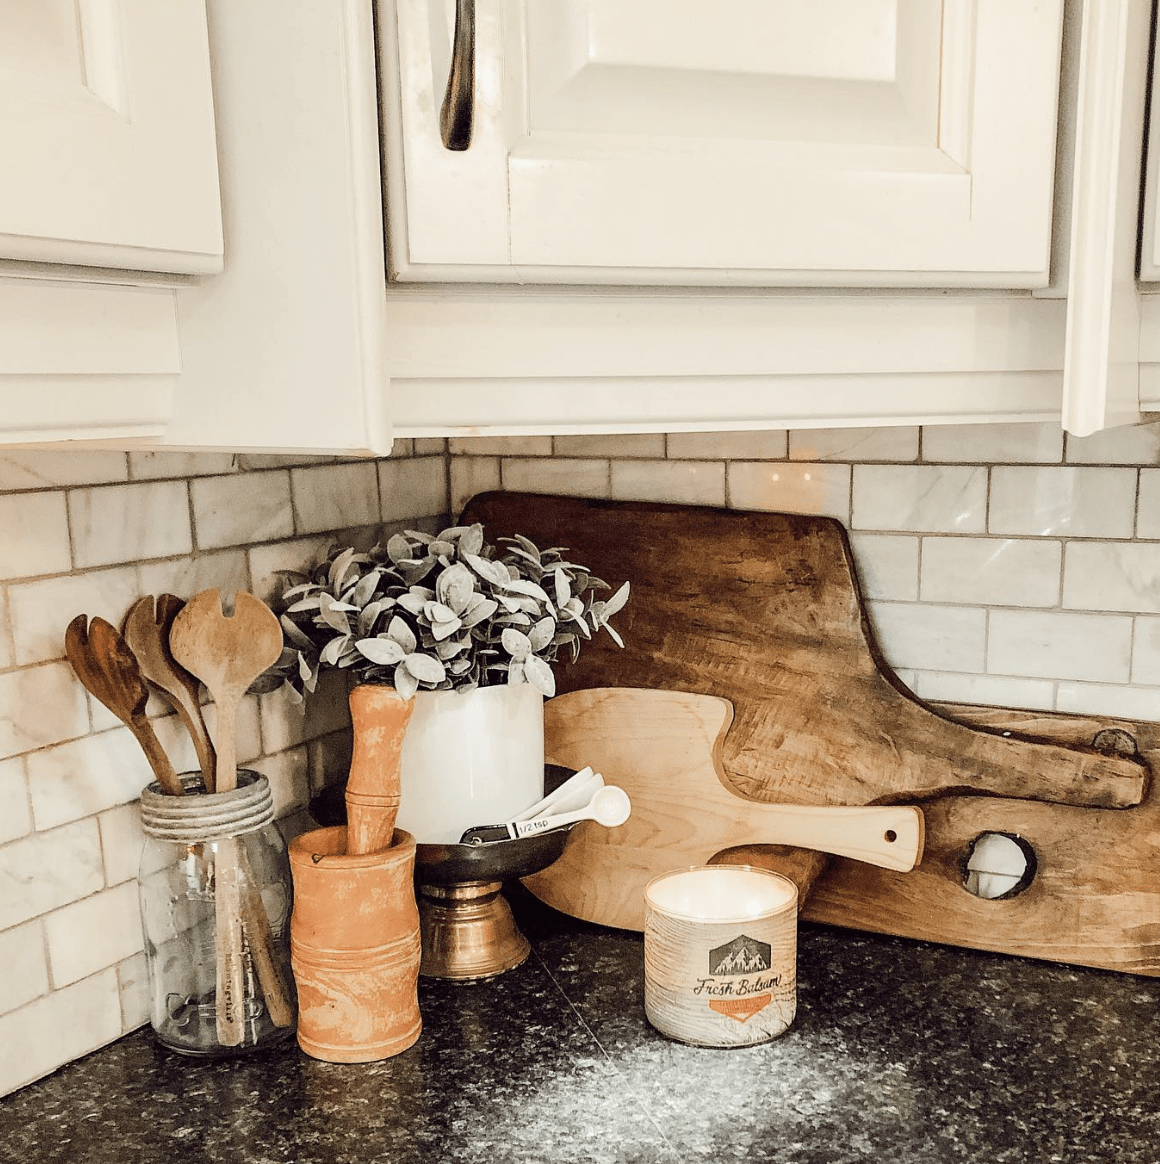 Kitchen counter corner with cooking utensils. 